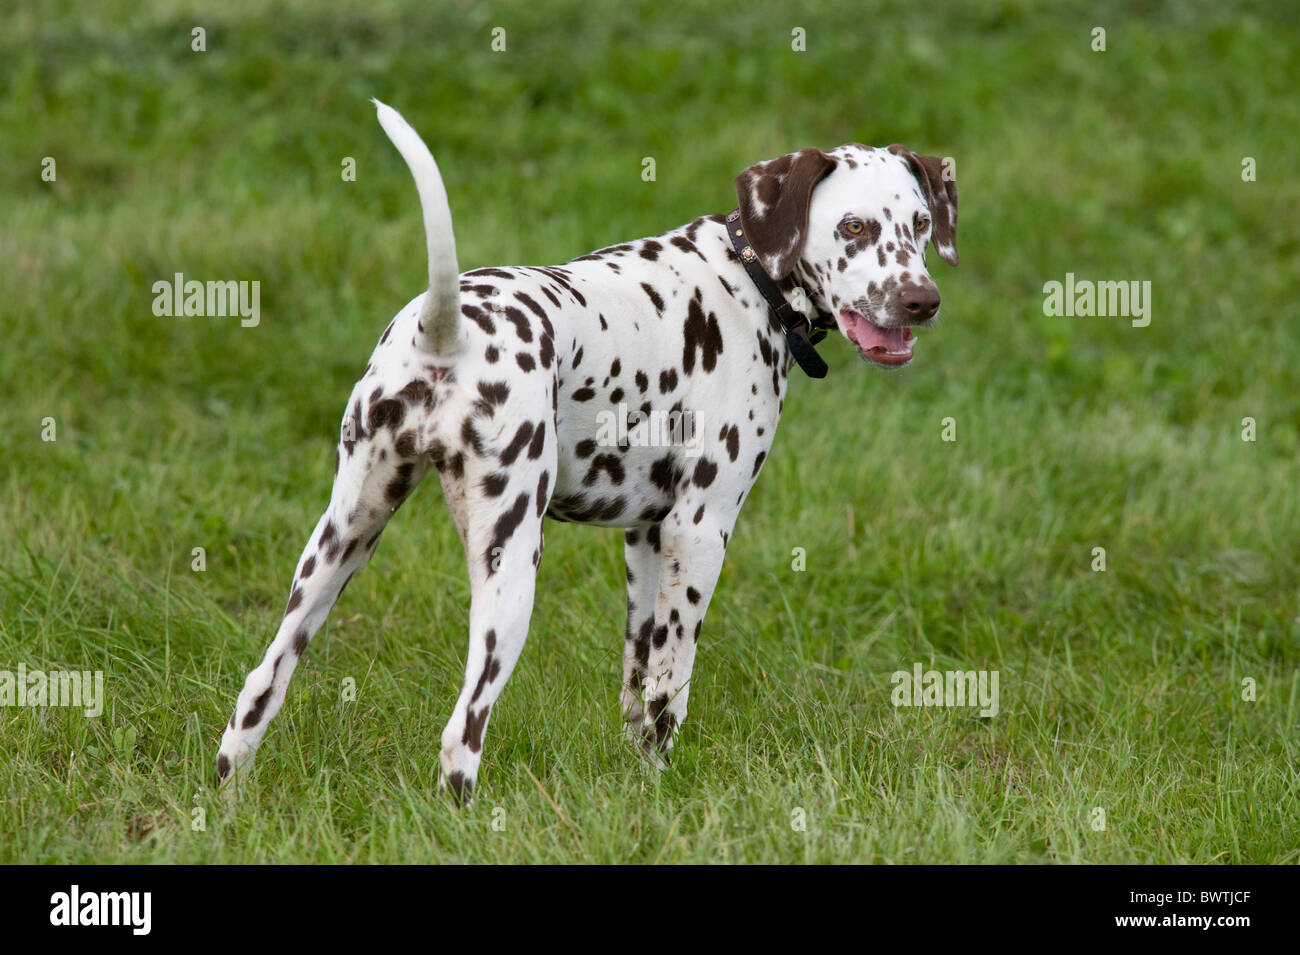 Dalmatian Dog UK in garden Stock Photo